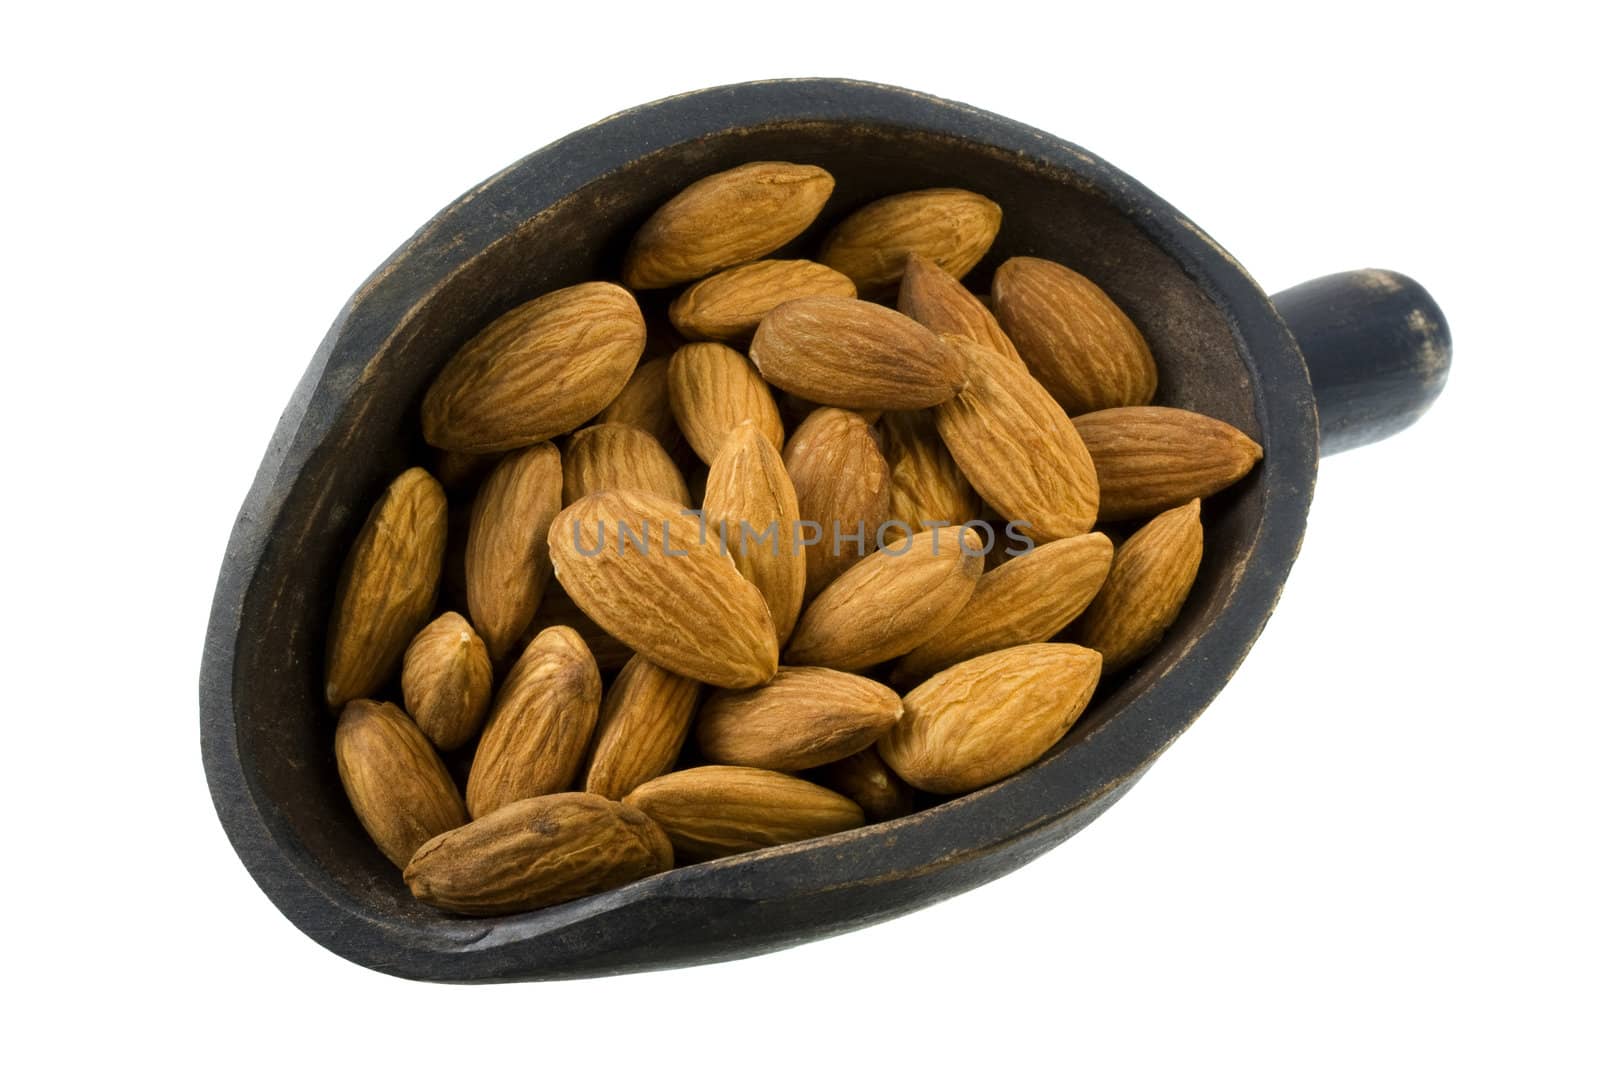 scoop of shelled almond nuts by PixelsAway